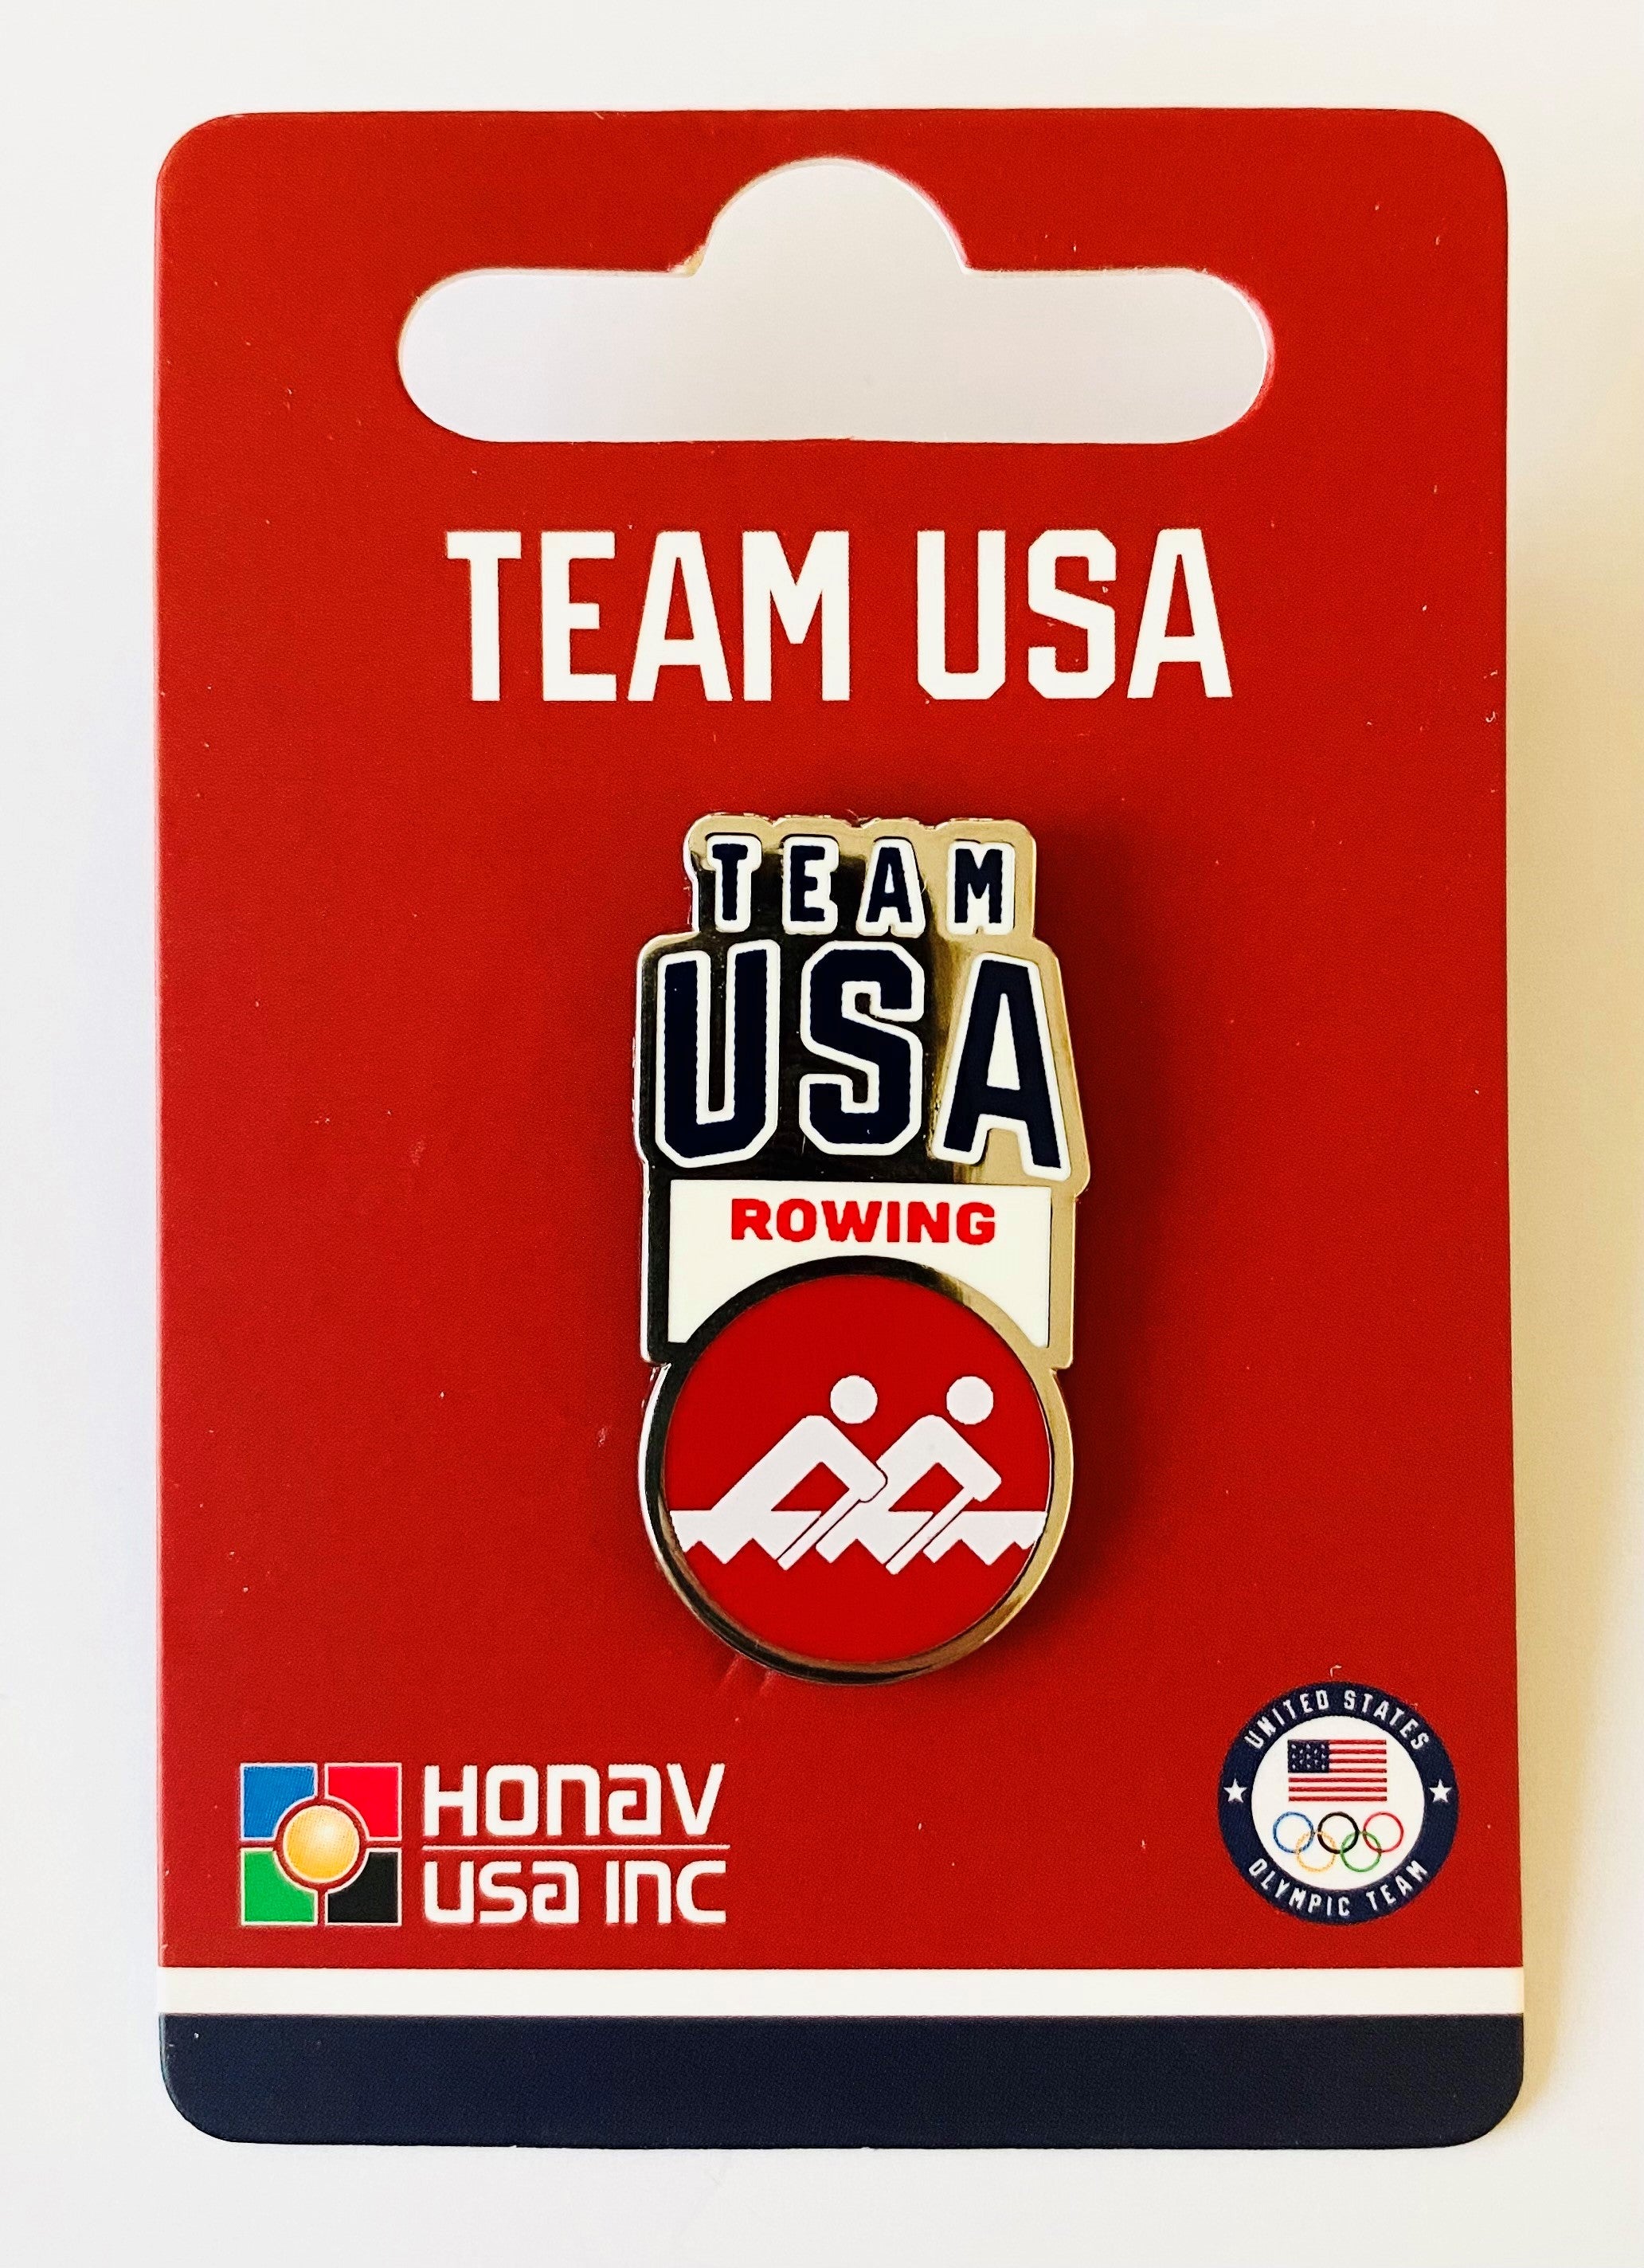 Team USA Rowing Pictogram Pin